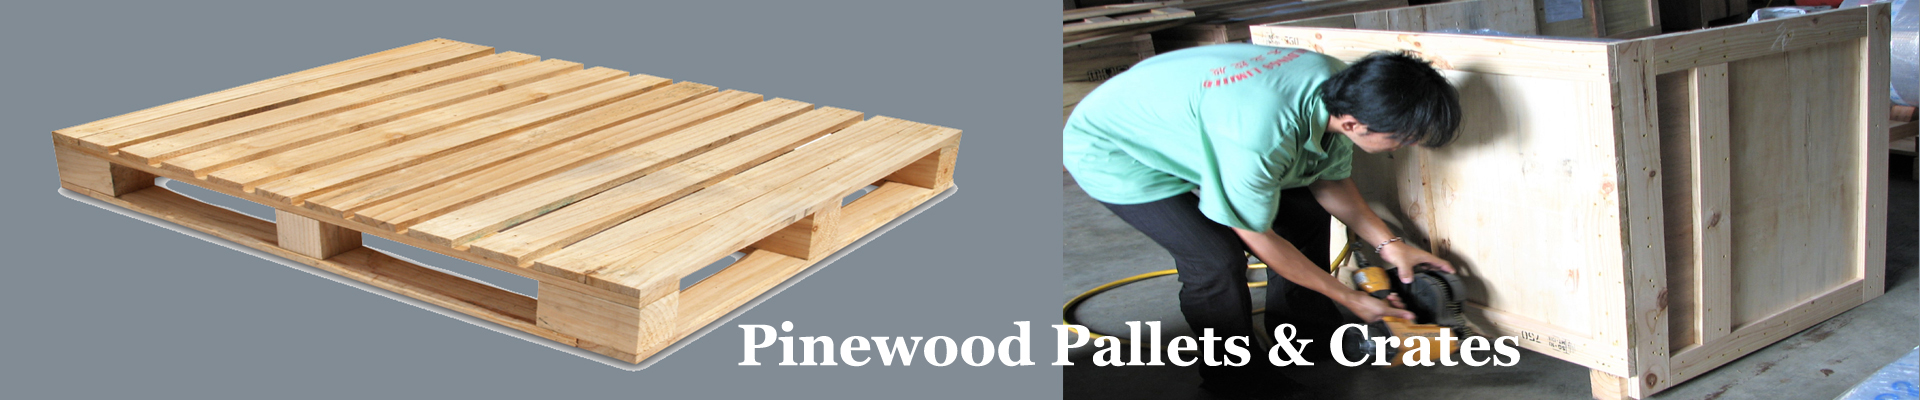 Pinewood Pallets & Crates